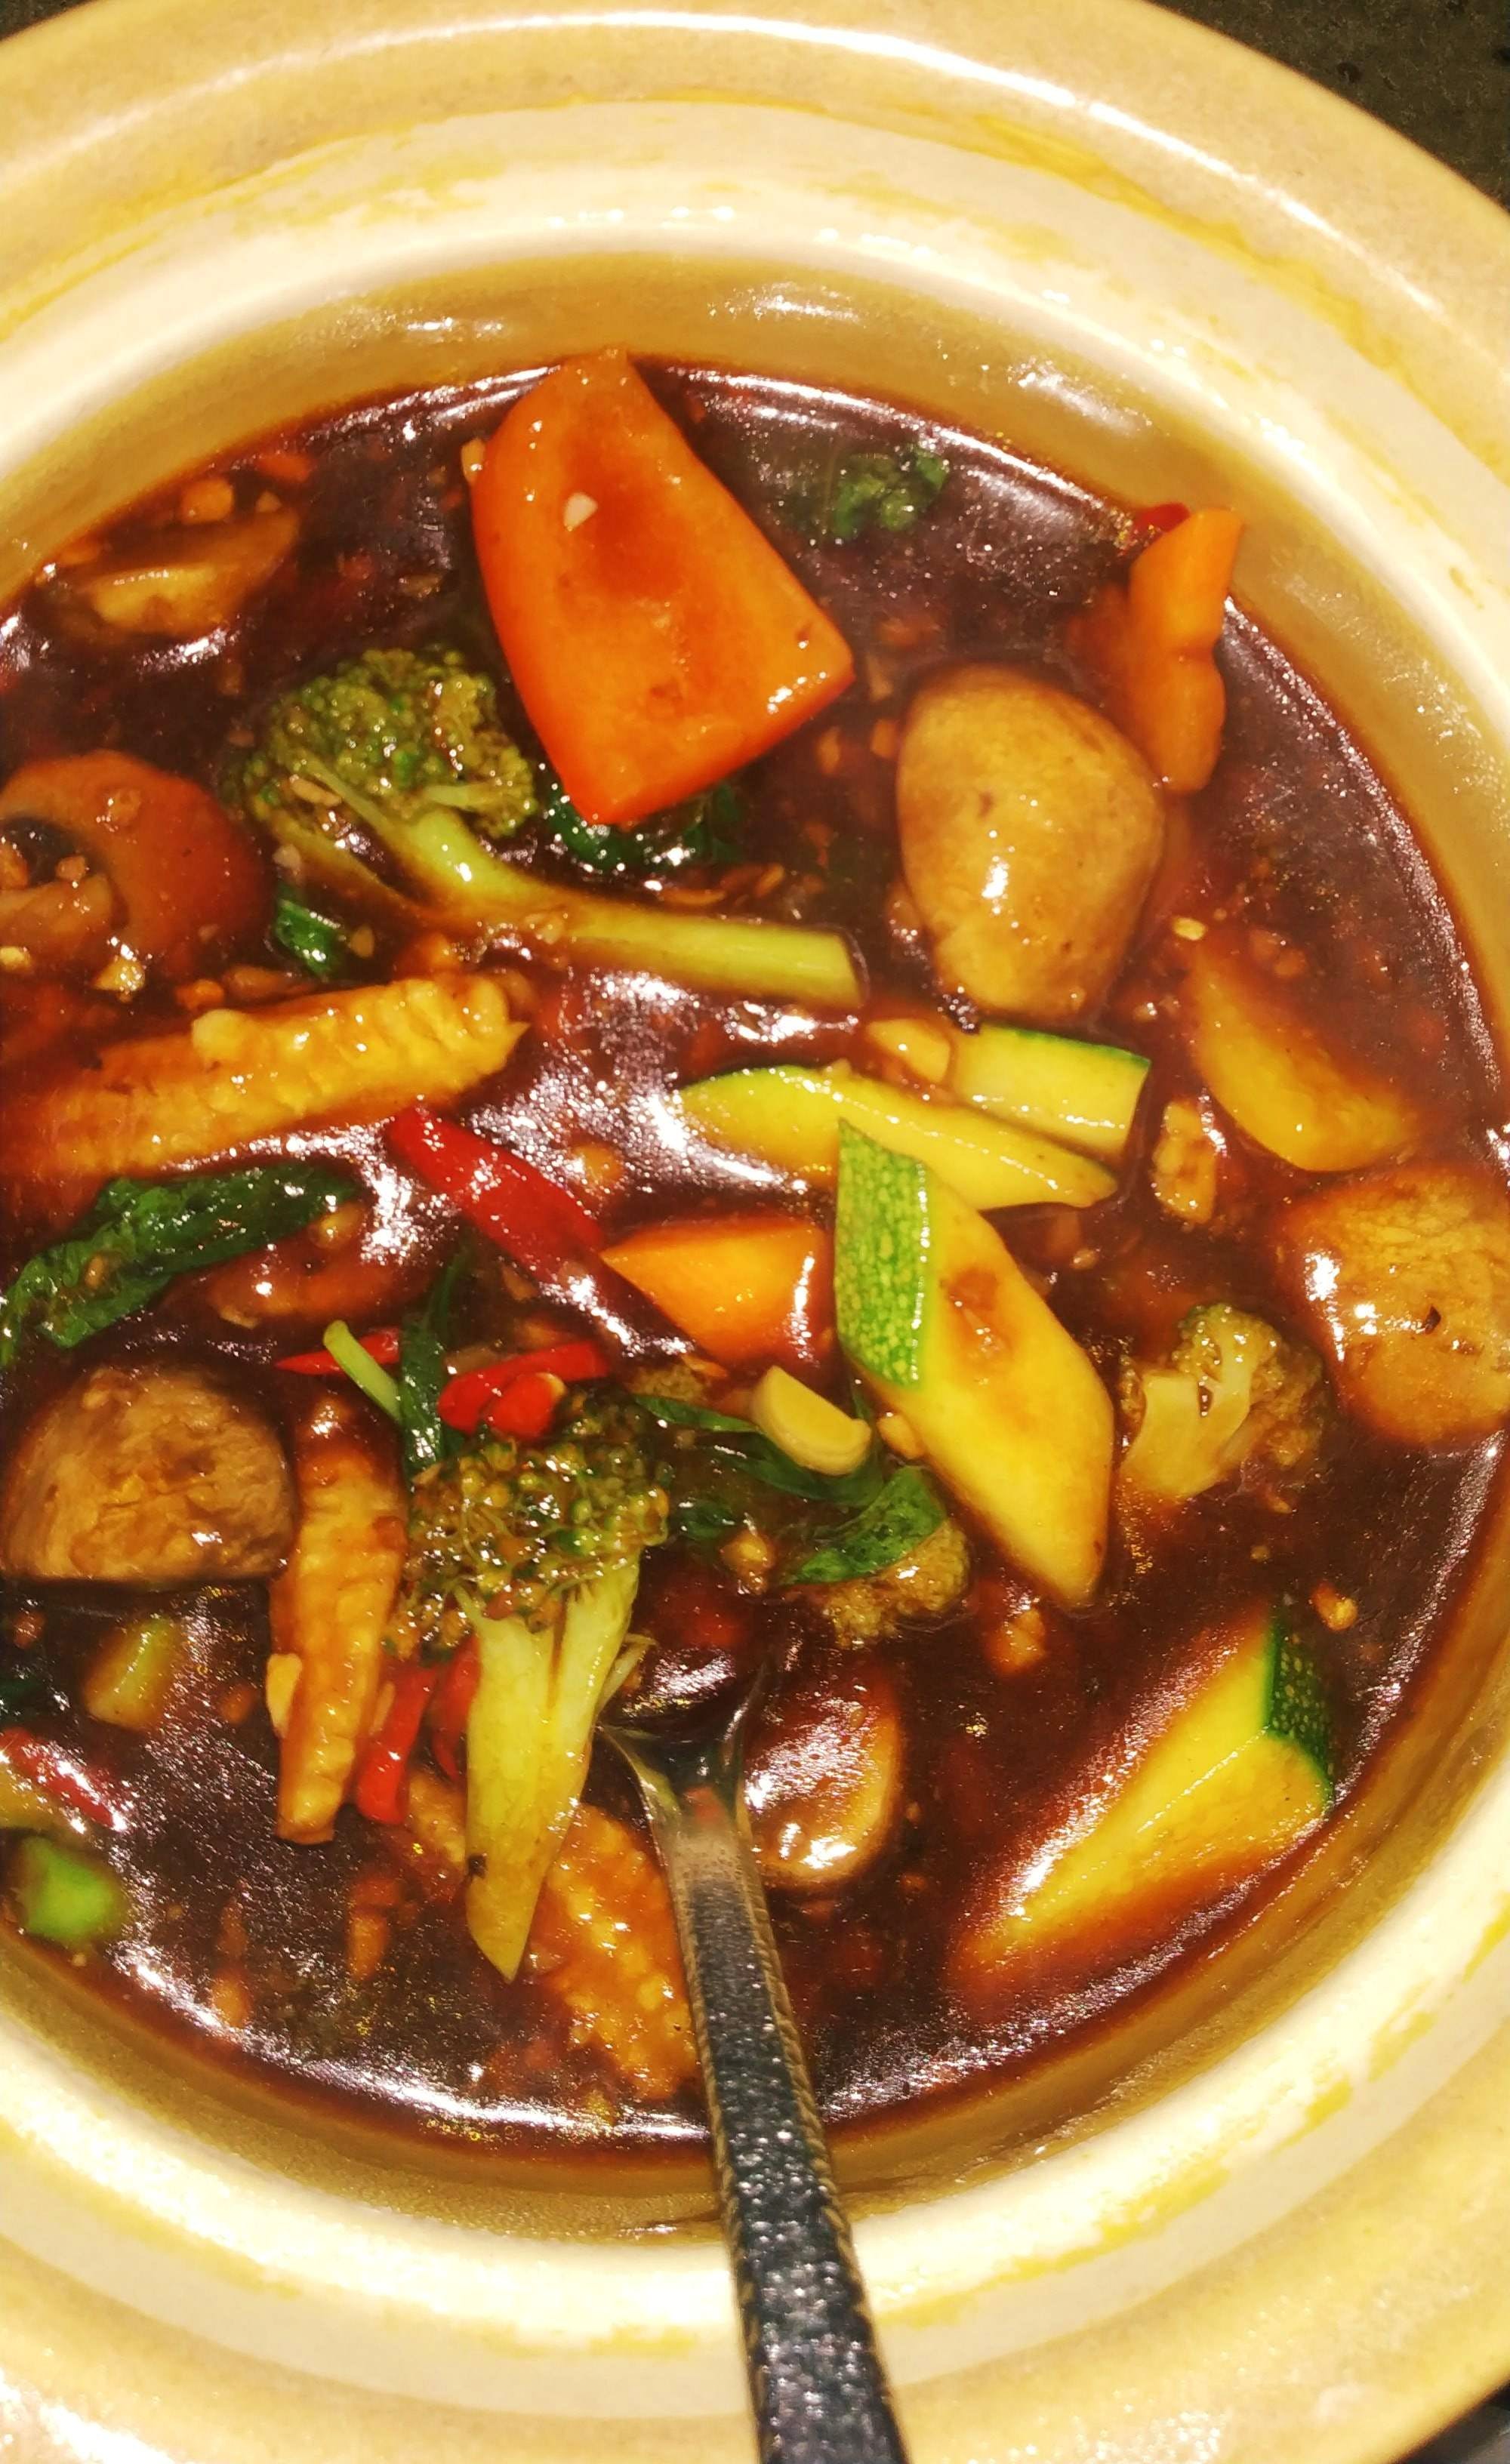 Cuisine,Food,Dish,Andong jjimdak,Meat,Ingredient,Produce,Galbijjim,Stew,Curry